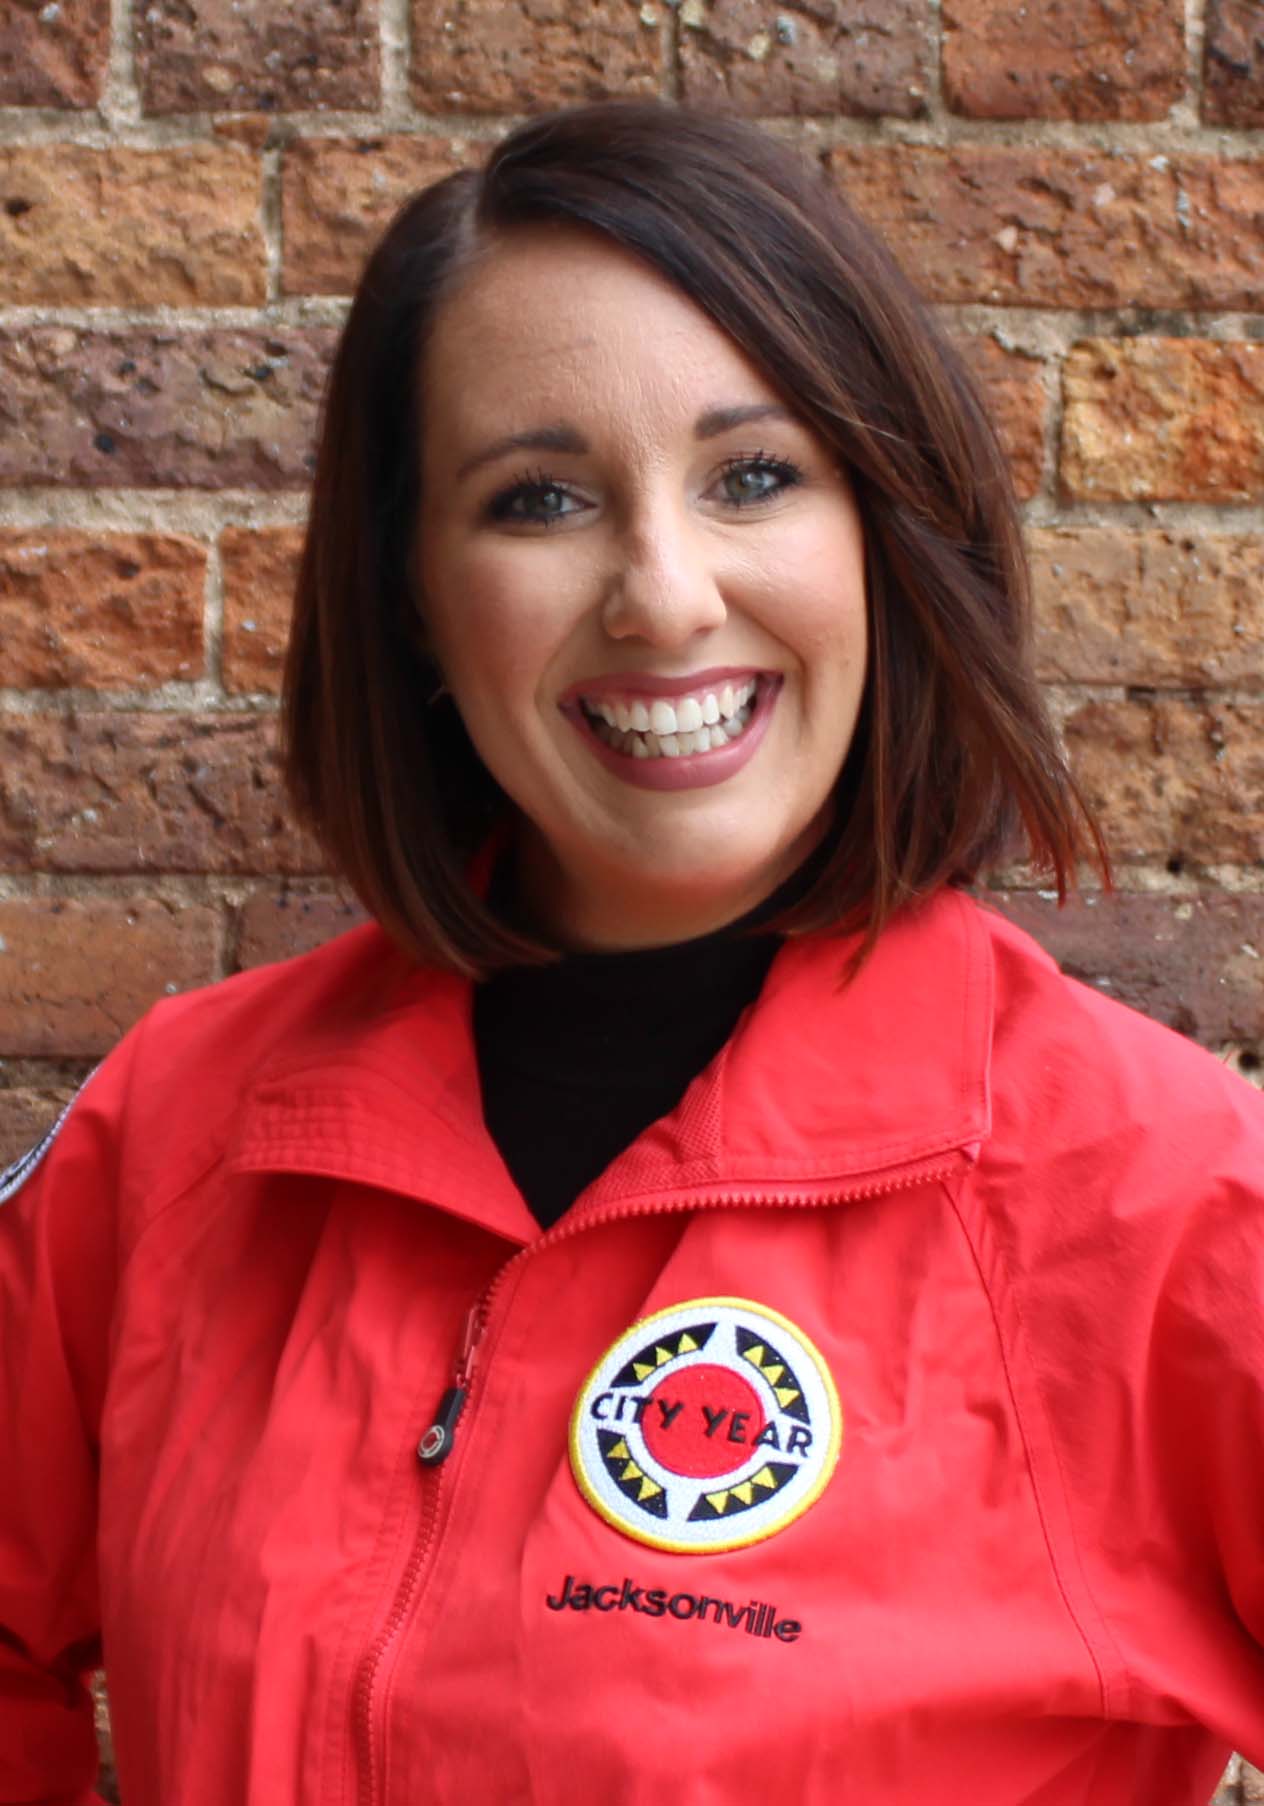 Allishia Bauman smiles as she wears her red City Year jacket